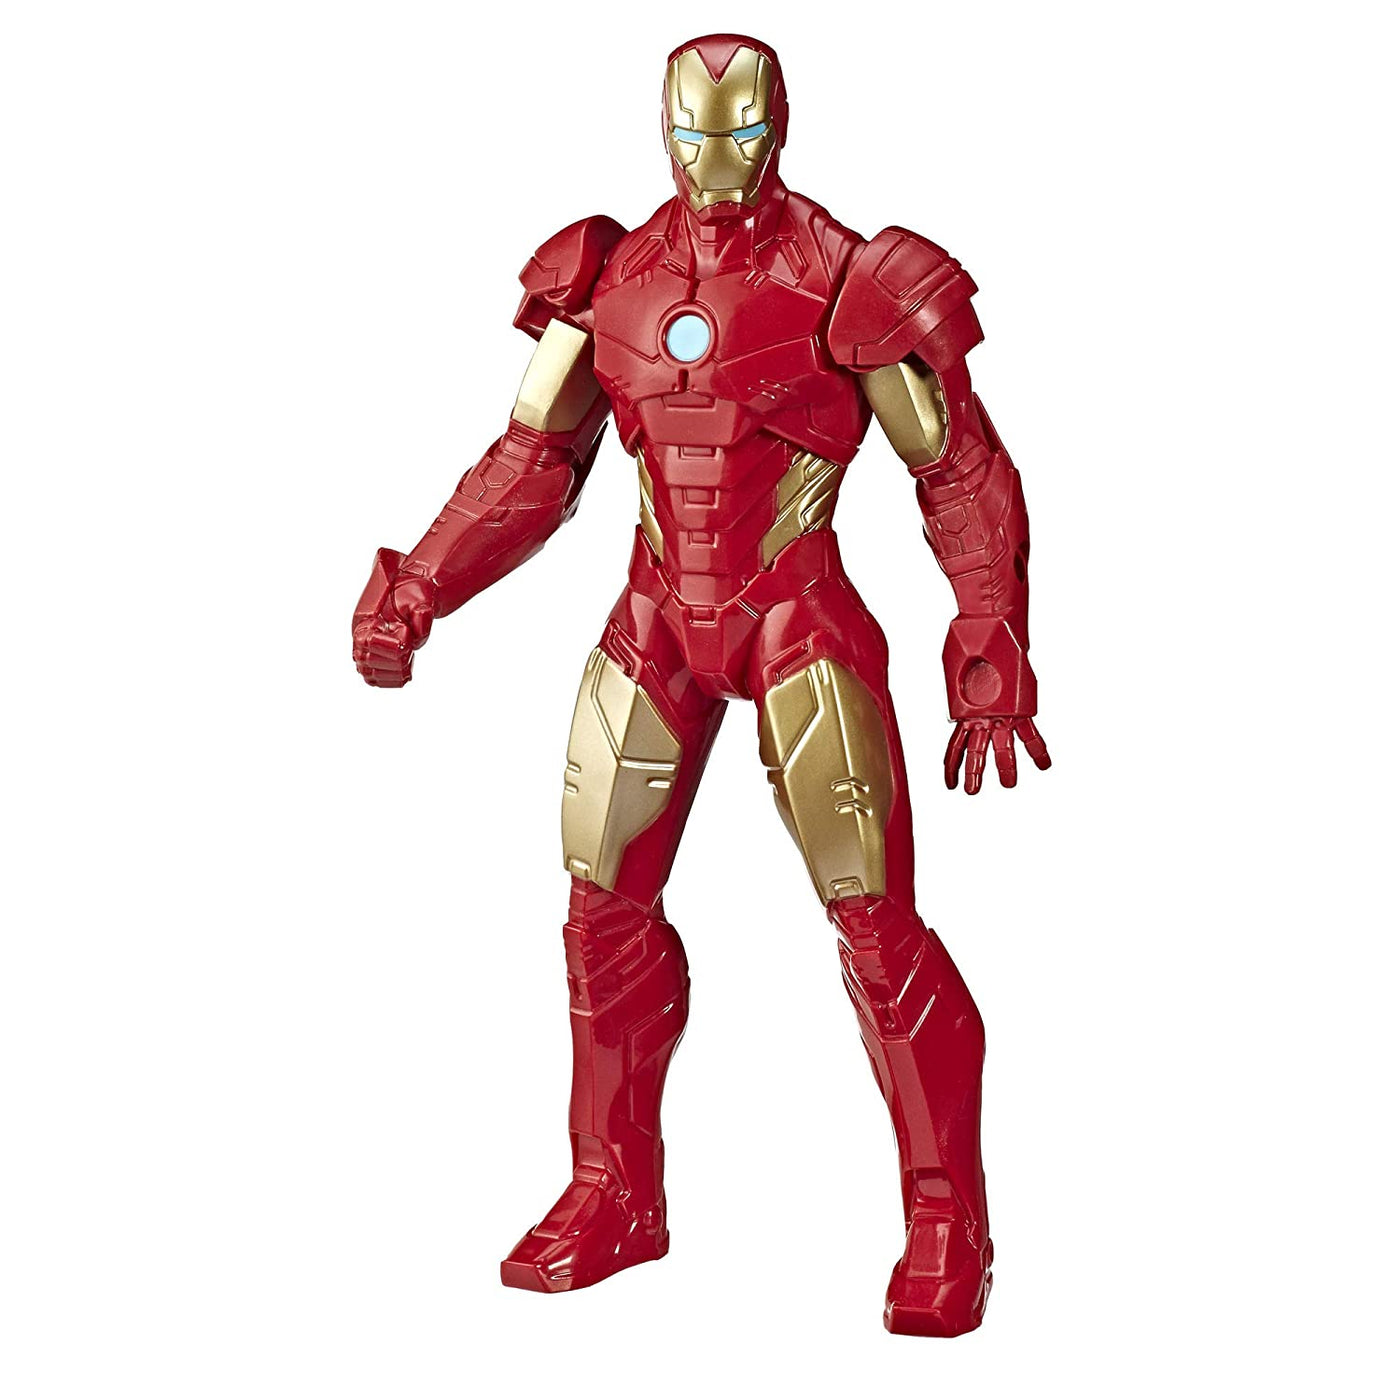 Marvel Iron Man Action Figure ( 9.5 Inch)| Hasbro